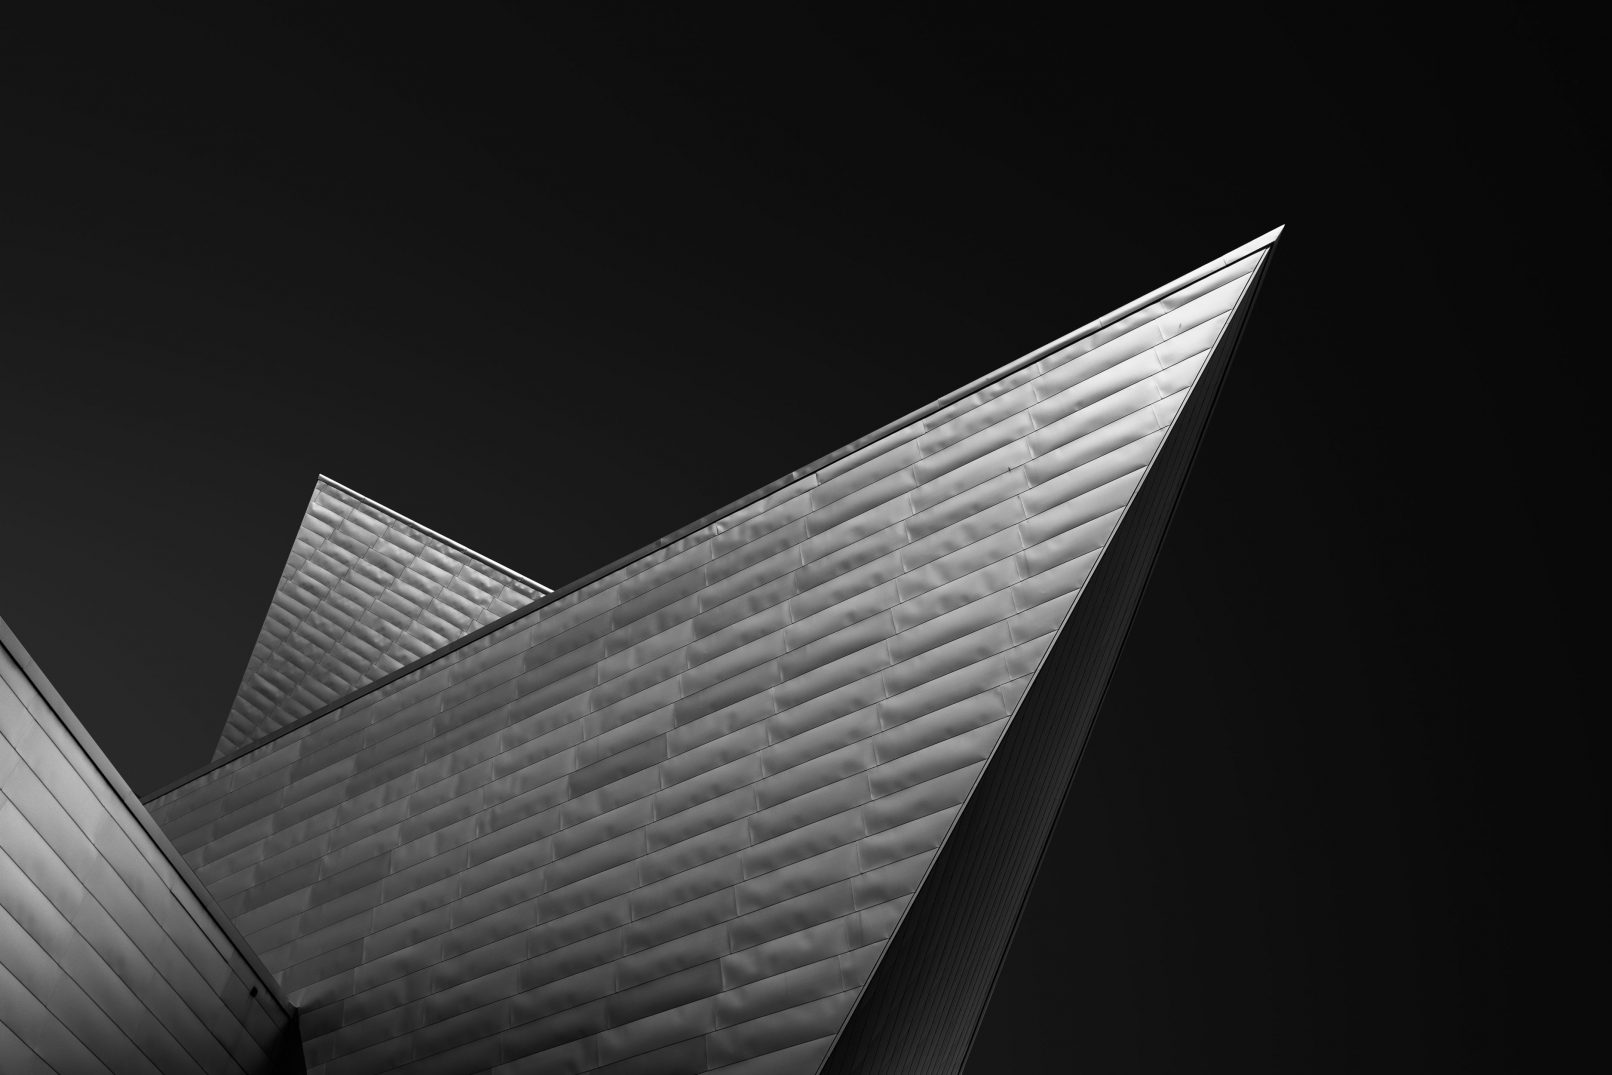 Denver Art Museum designed by architect Daniel Libeskind